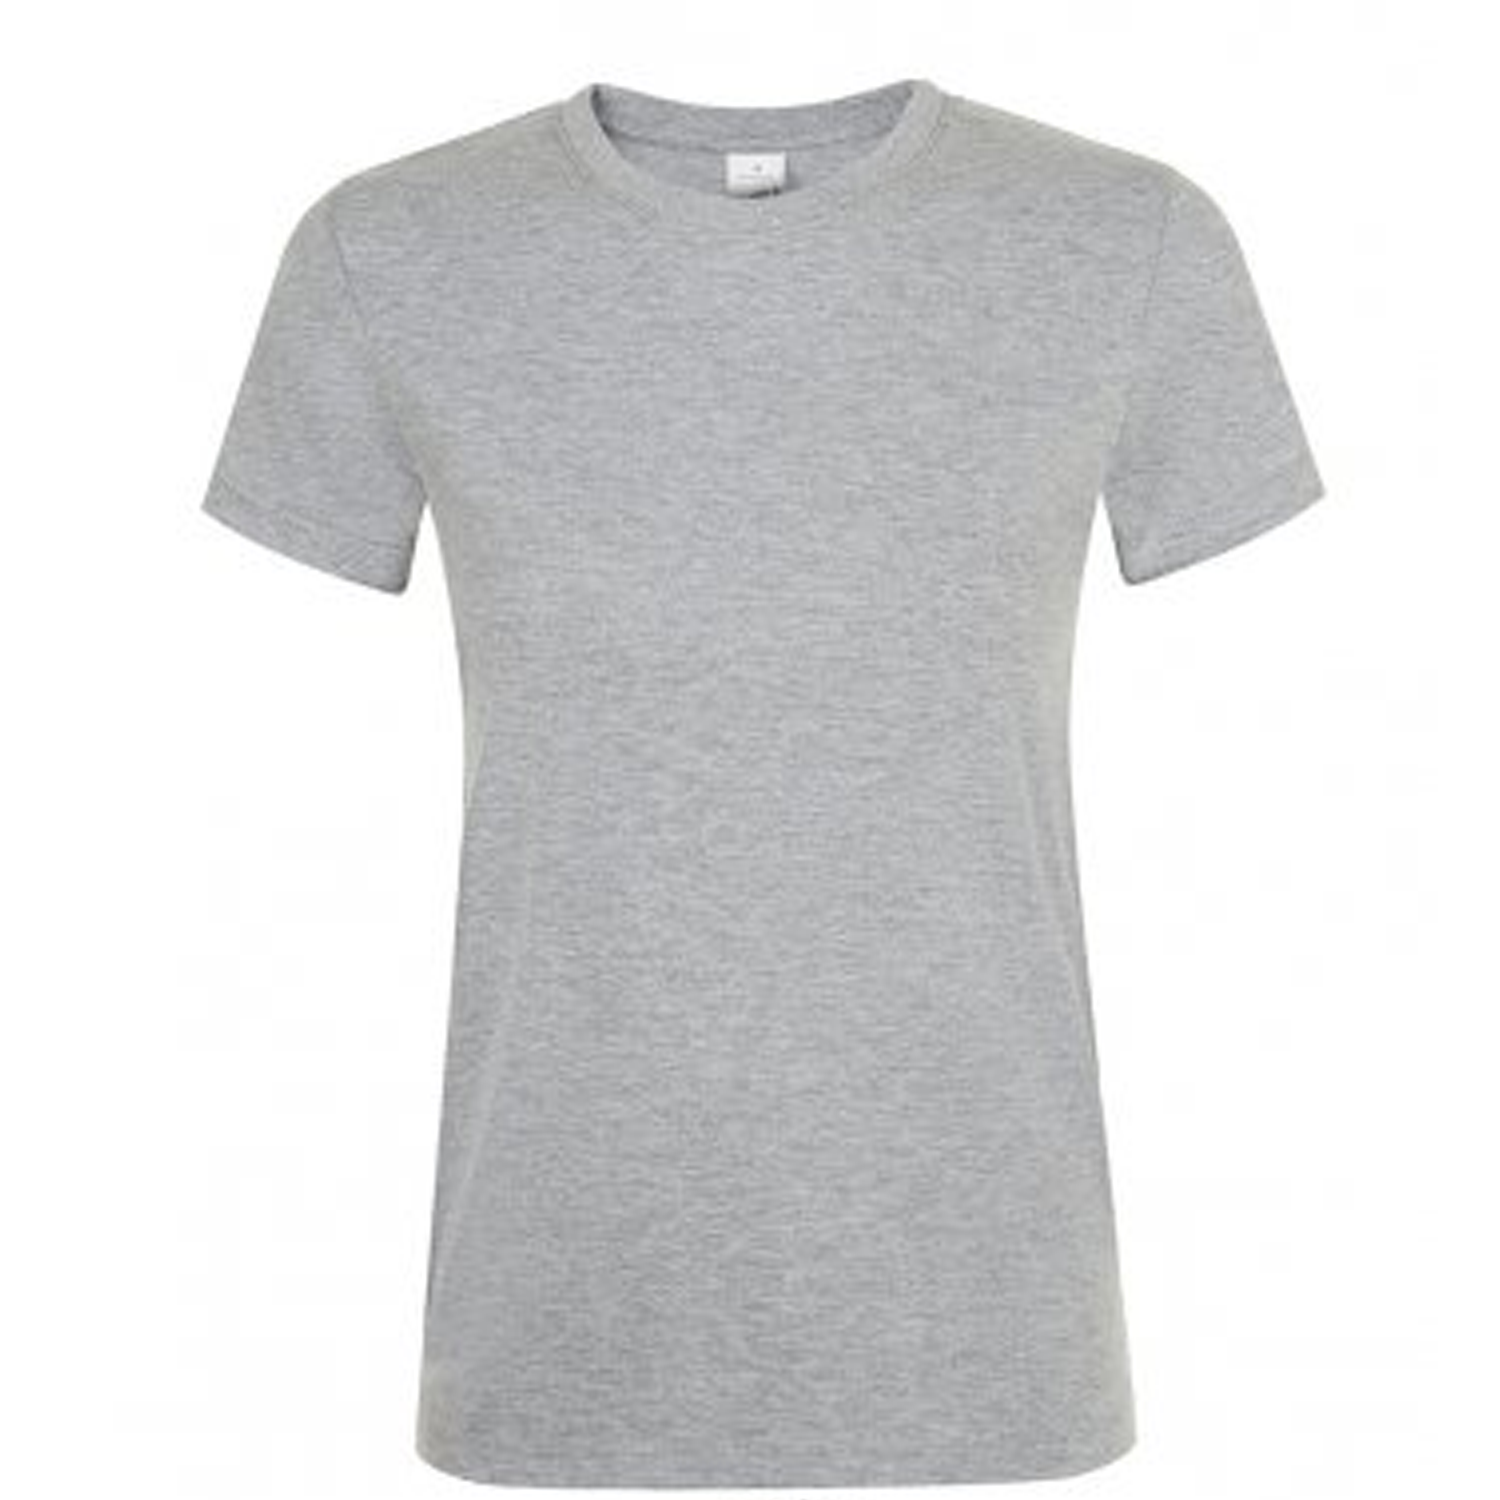 plain shirt gray